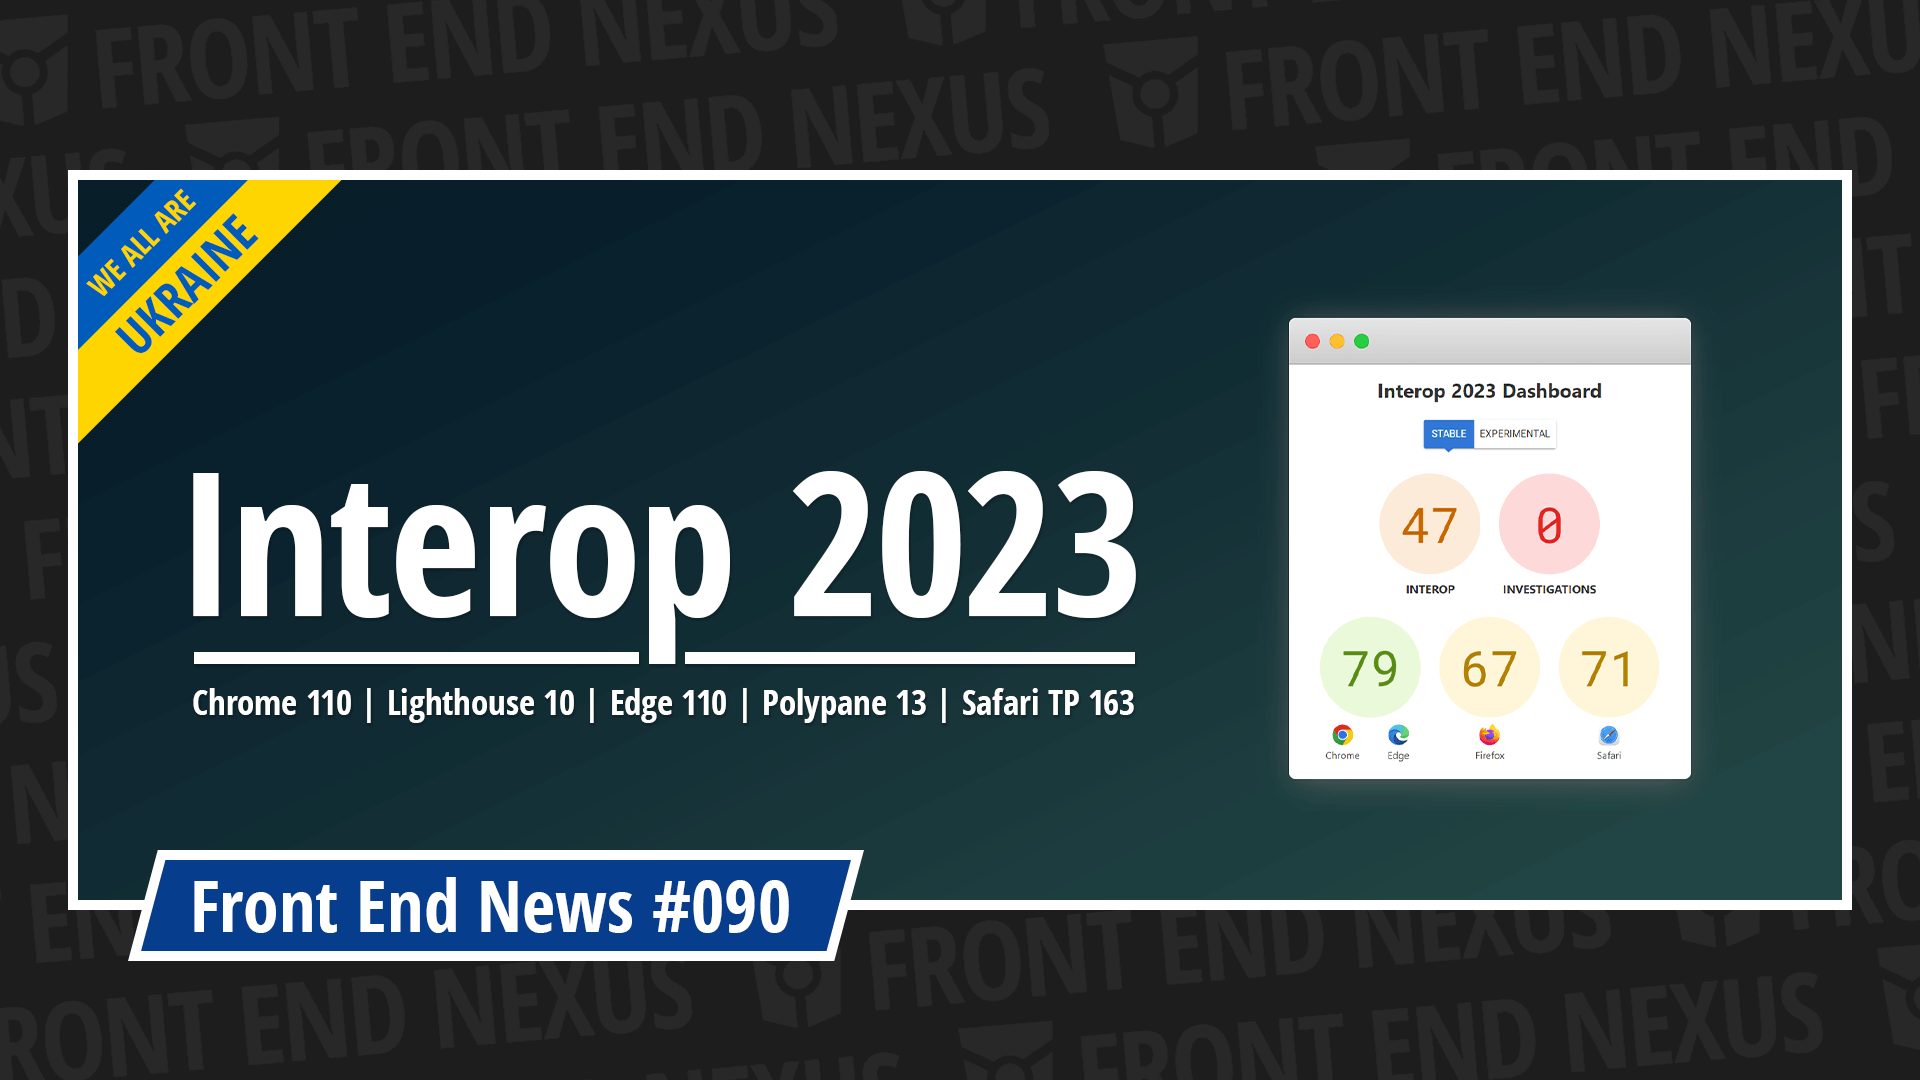 Interop 2023, Chrome 110, Lighthouse 10, Edge 110, Polypane 13, Safari TP 163, and more | Front End News #090